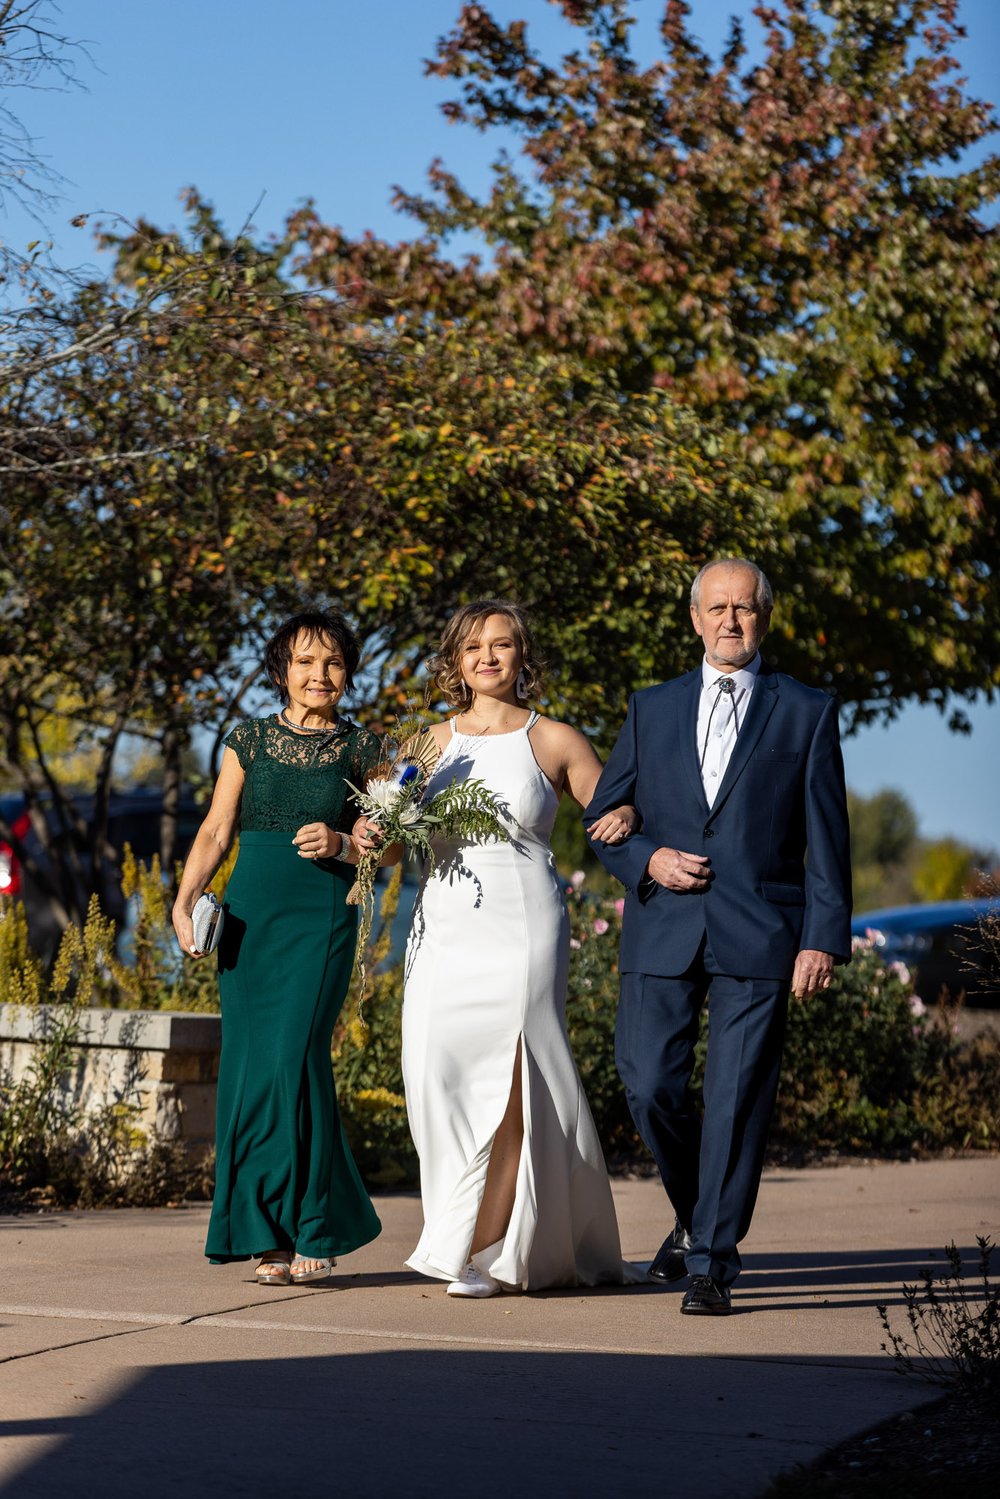 Alex Maldonado Photography | Chicago Wedding Photographer | Four Rivers Environmental Education Center bride walking down aisle.jpg